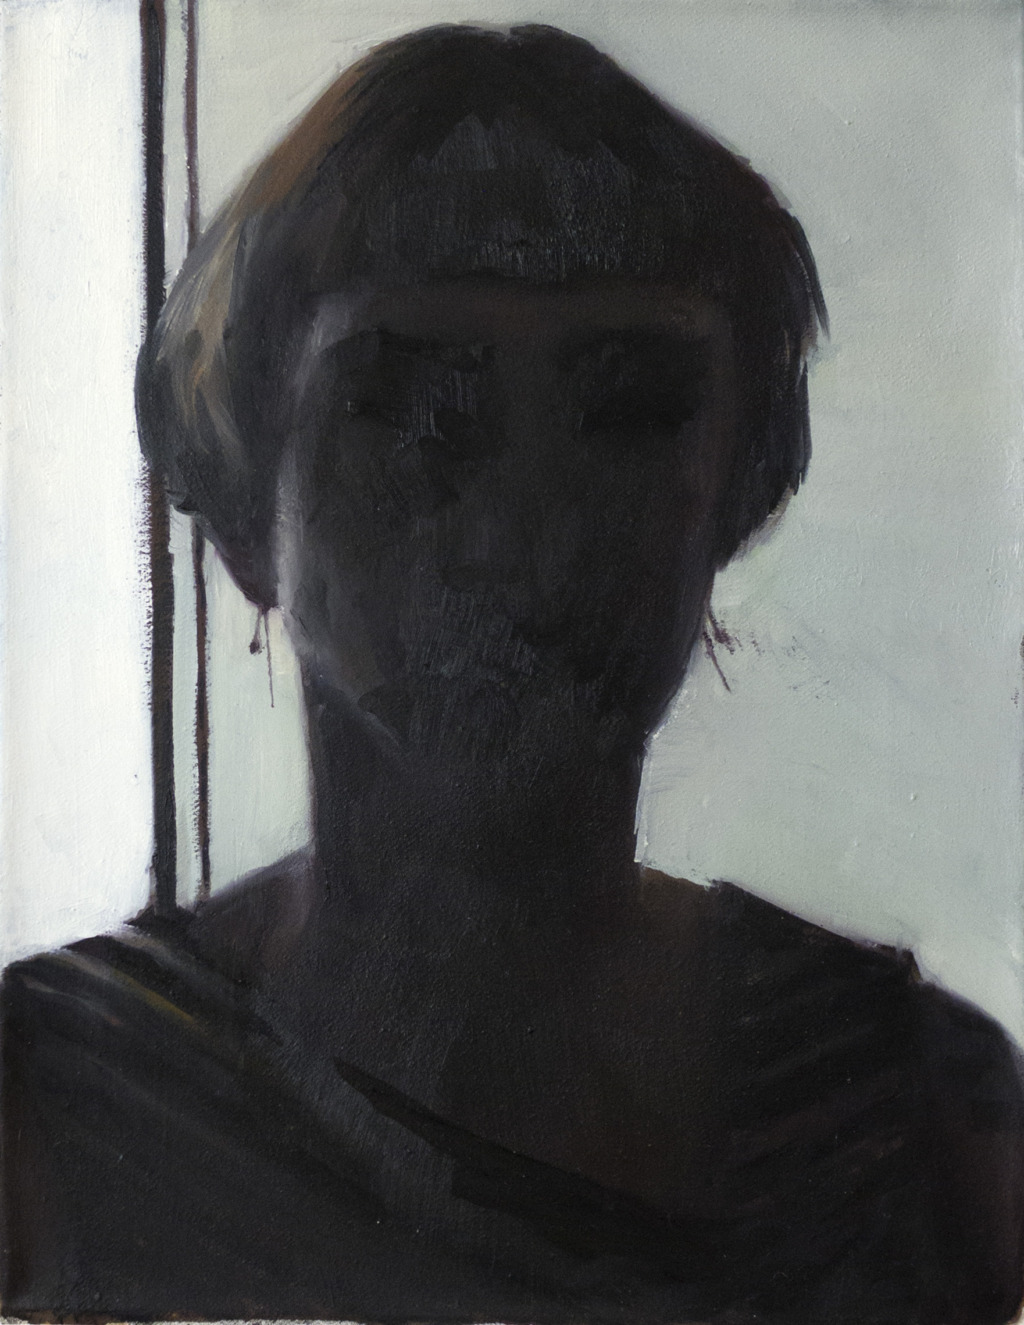 Andrea Muheim, New Studio, 2017
Oil on canvas
39 x 30 cm